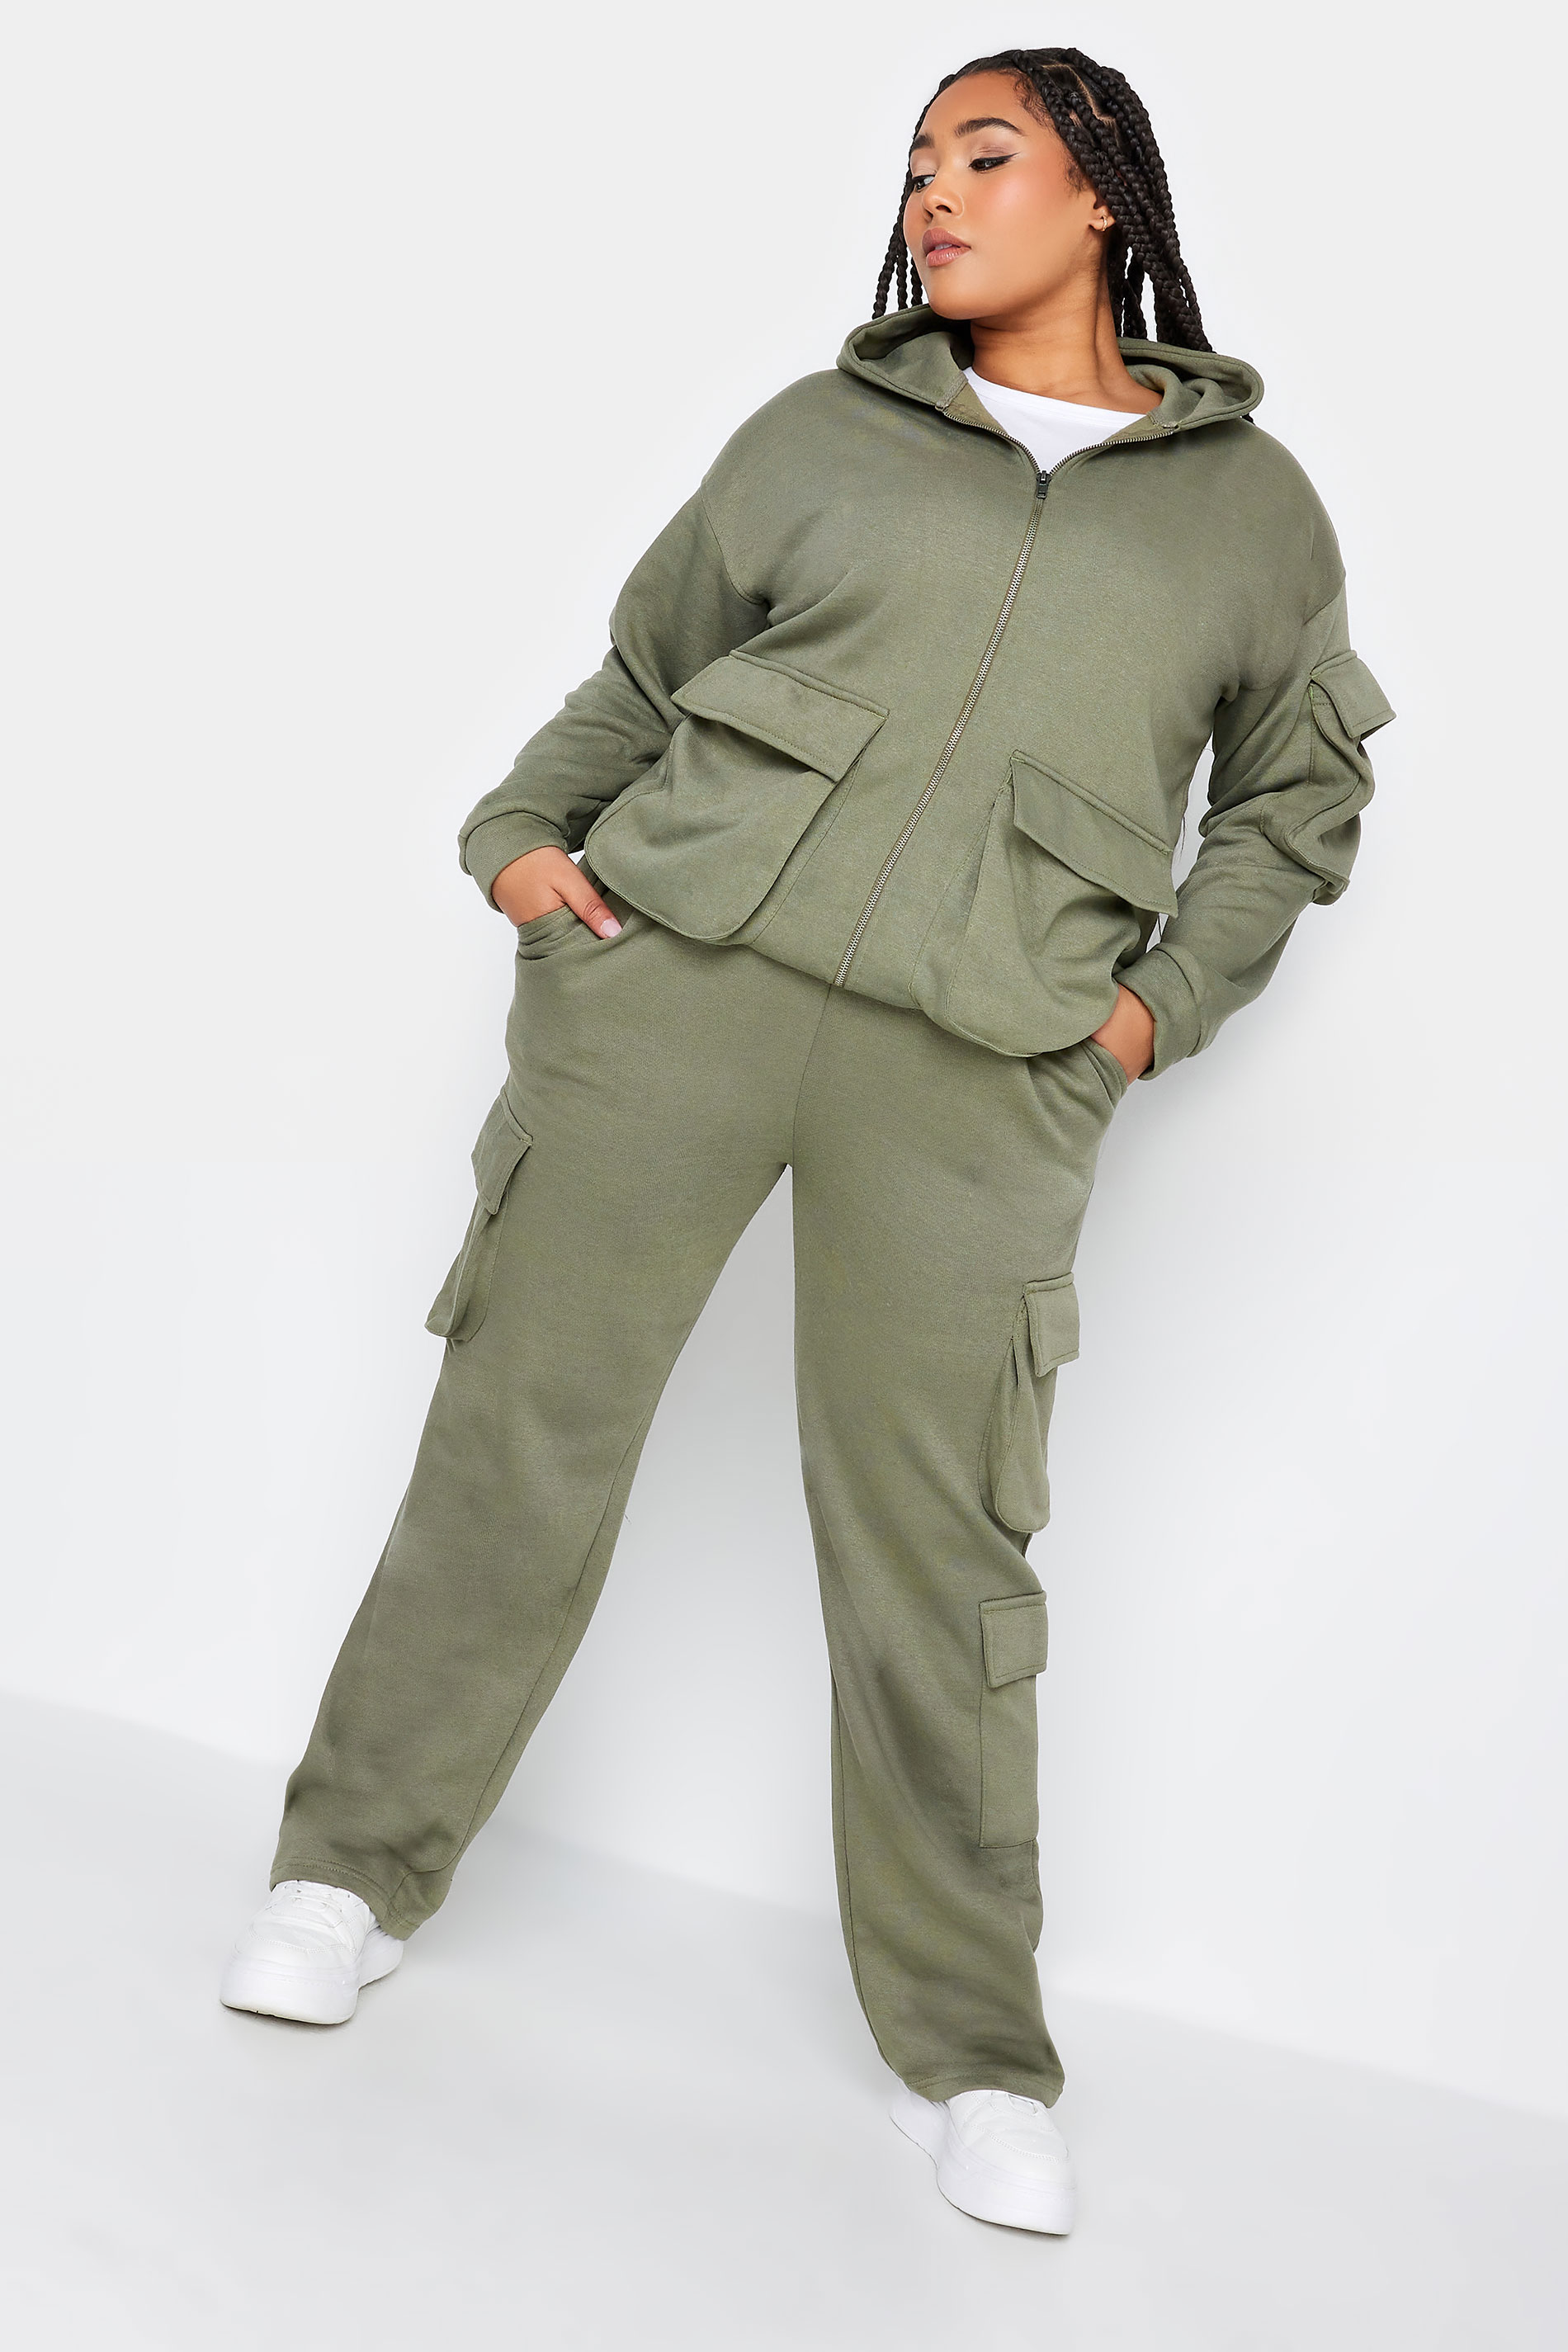 YOURS Plus Size Khaki Green Straight Leg Cargo Joggers | Yours Clothing 2